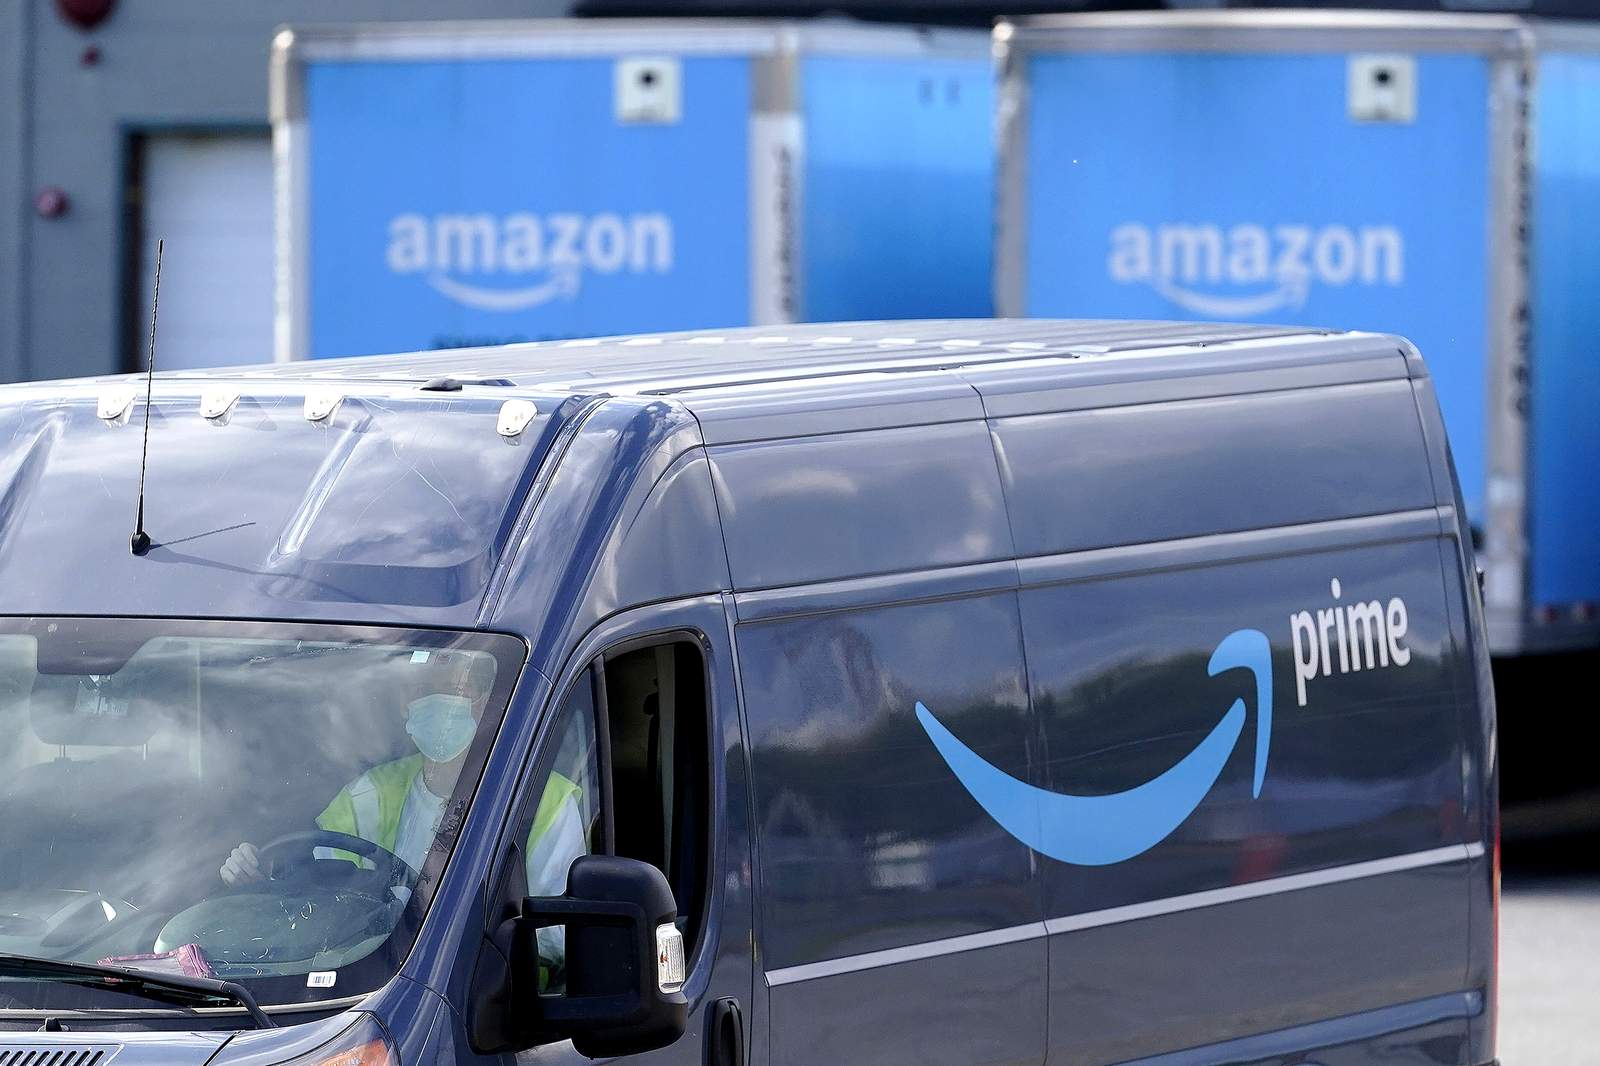 Amazon plans new distribution center near San Antonio airport